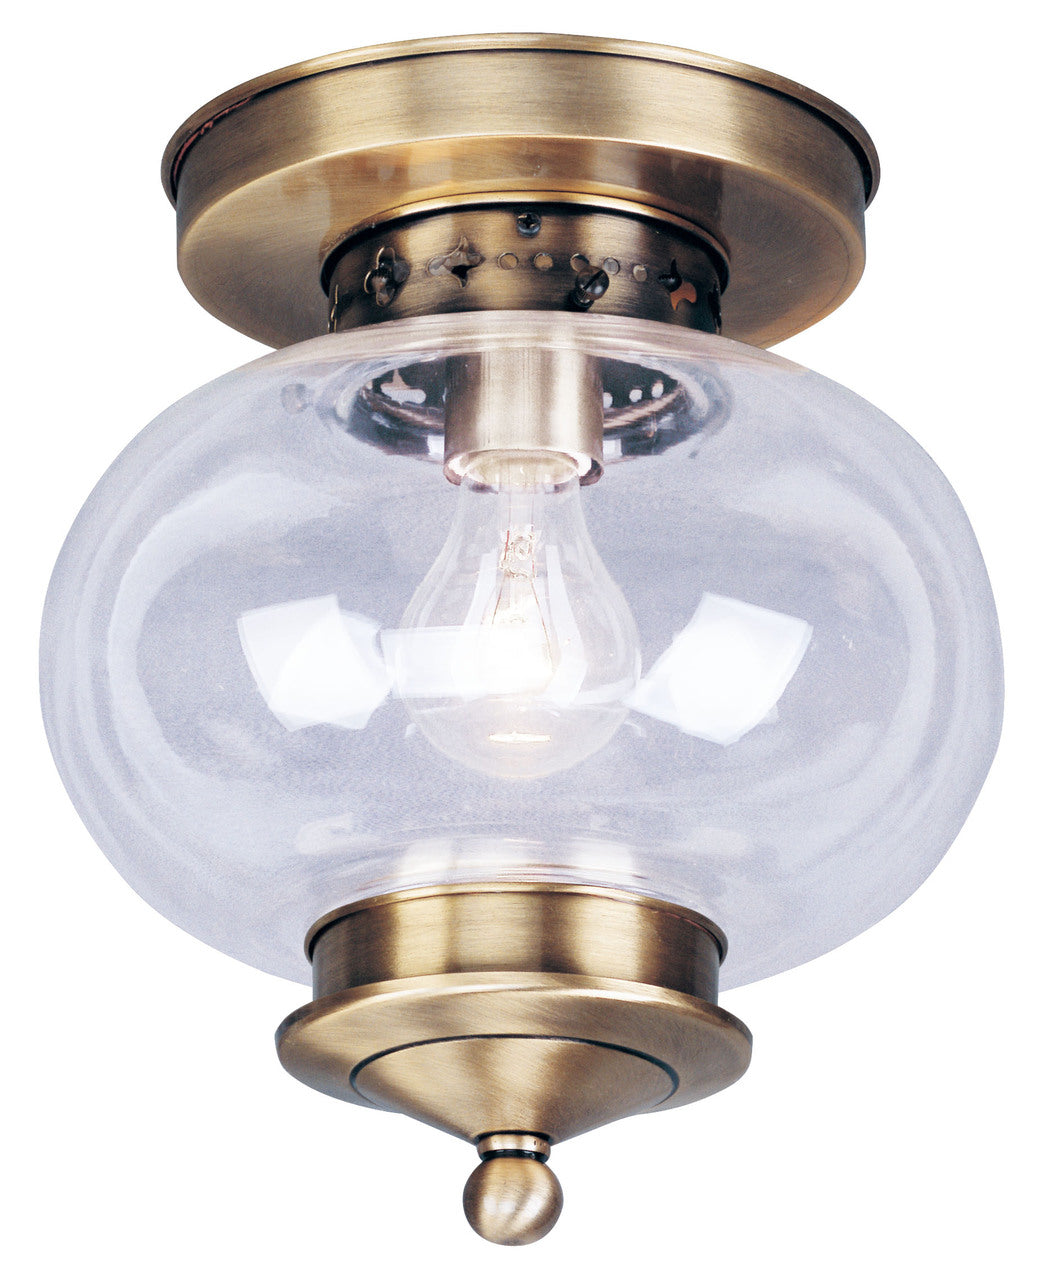 LIVEX Lighting 5032-01 Harbor Flushmount in Antique Brass (1 Light)